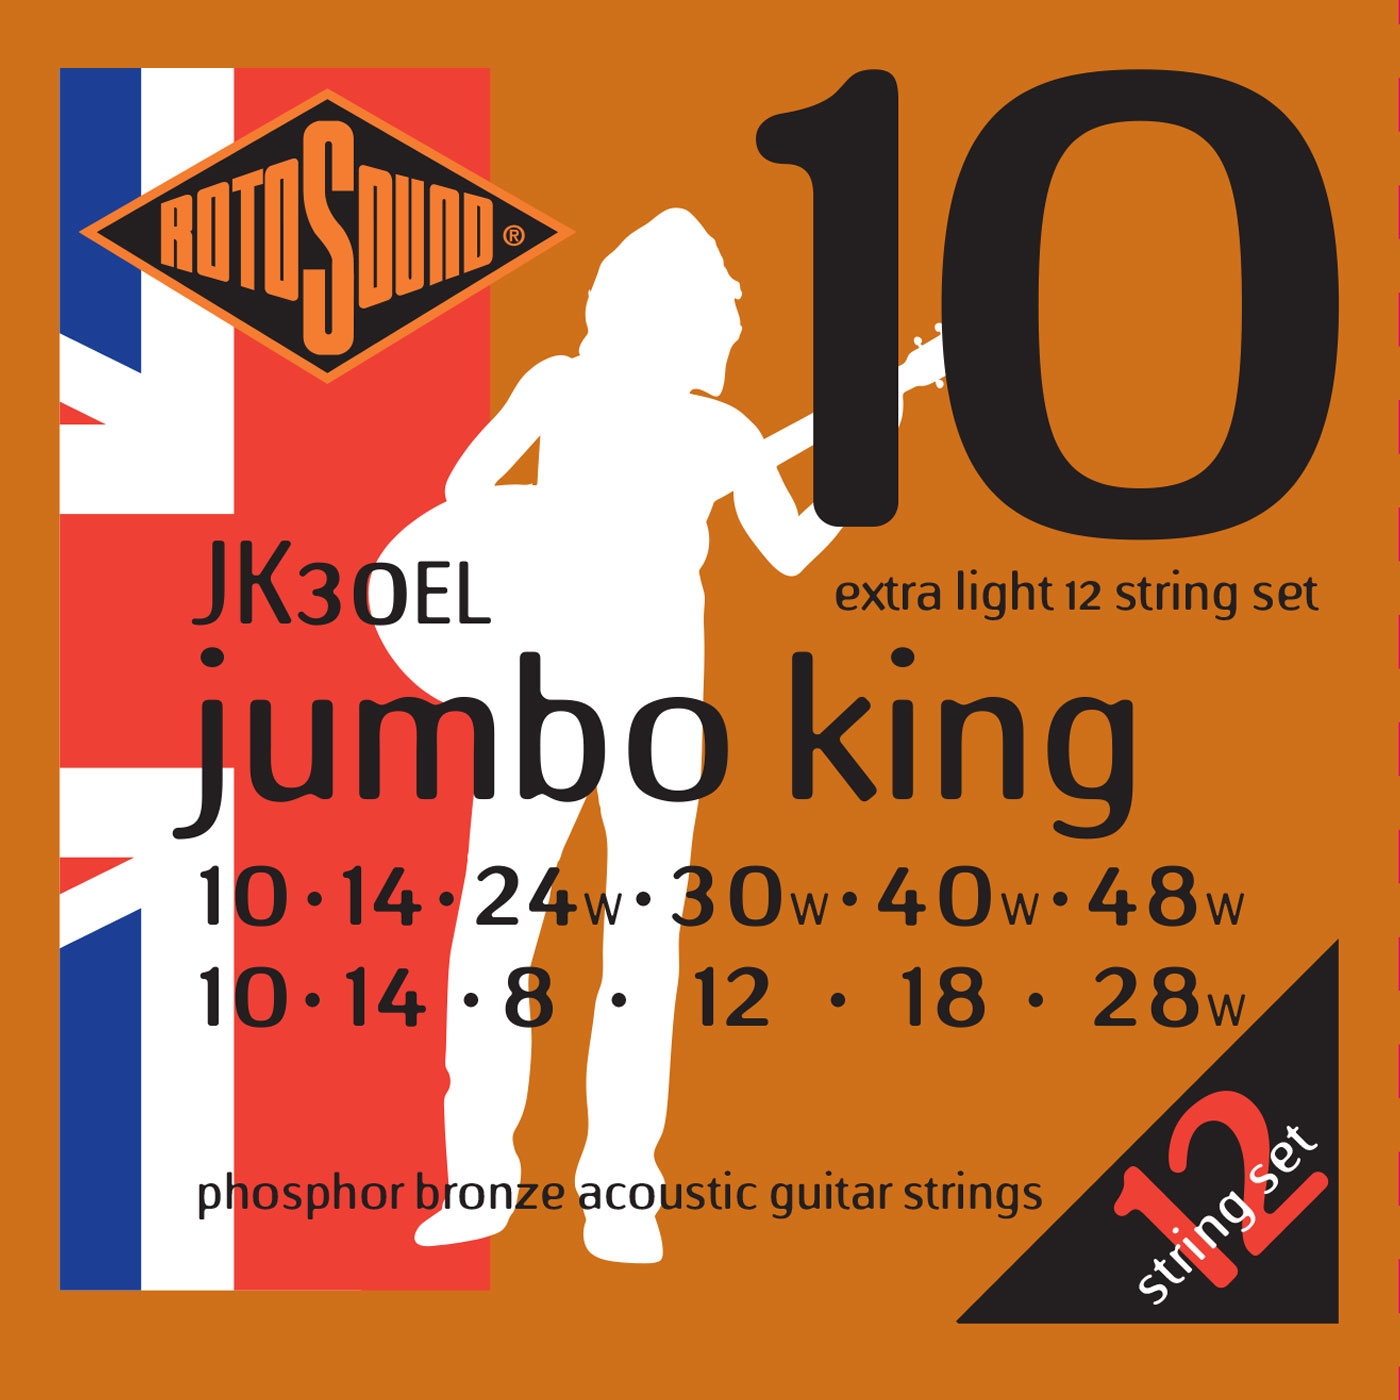 An image of Rotosound JK30EL 12-String Acoustic Guitar Strings 10-48 | PMT Online